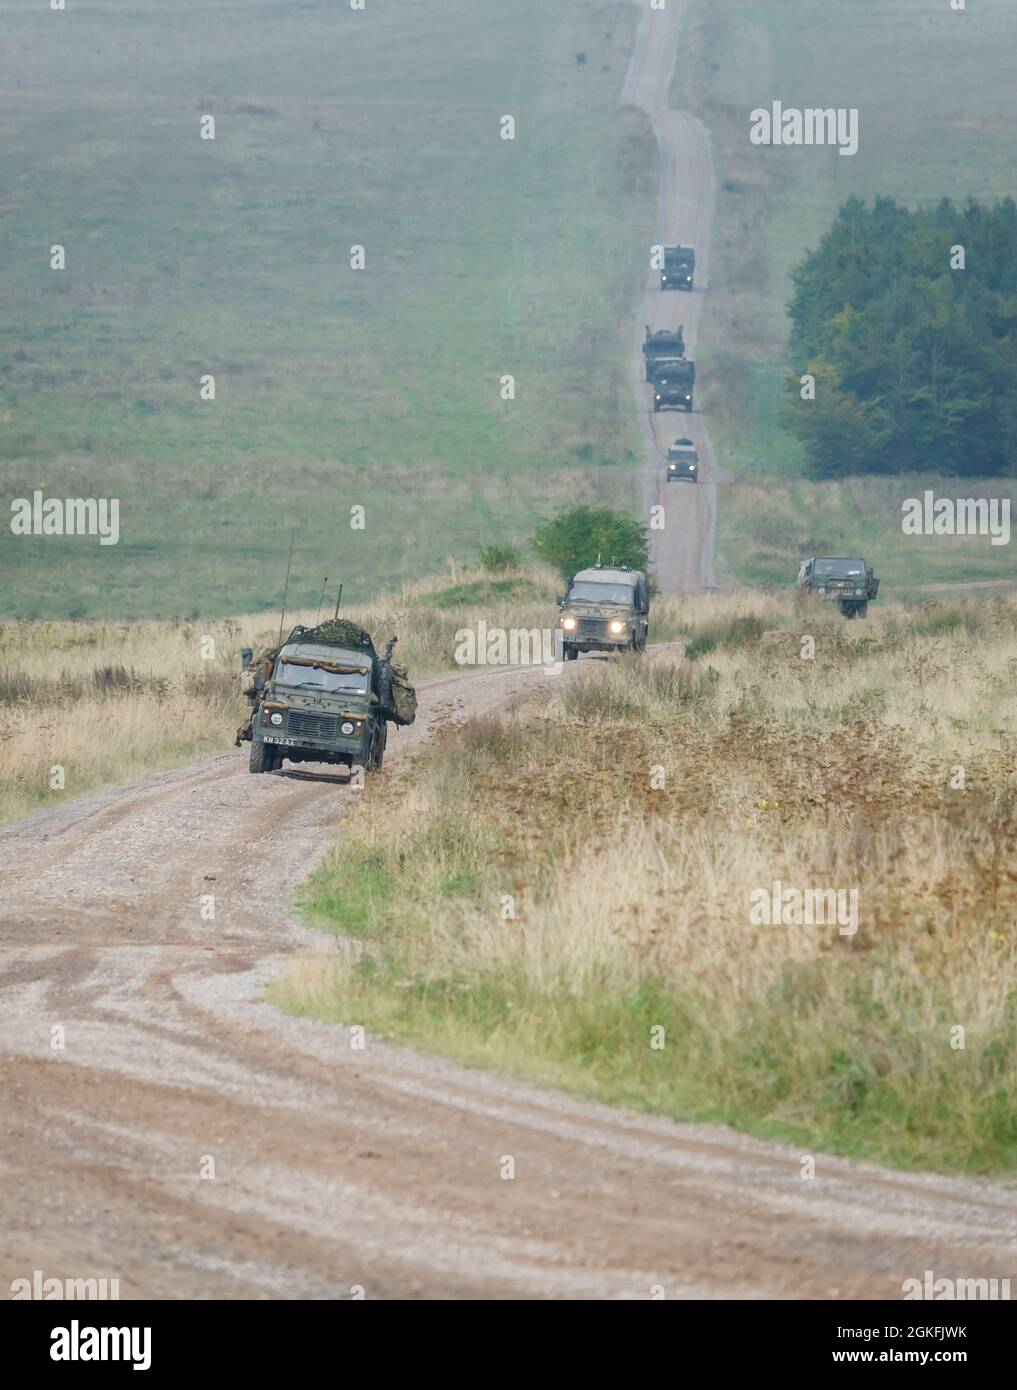 British army Land Rover Wolf 4×4 military medium utility vehicle in action on a military exercise, Salisbury Plain UK Stock Photo